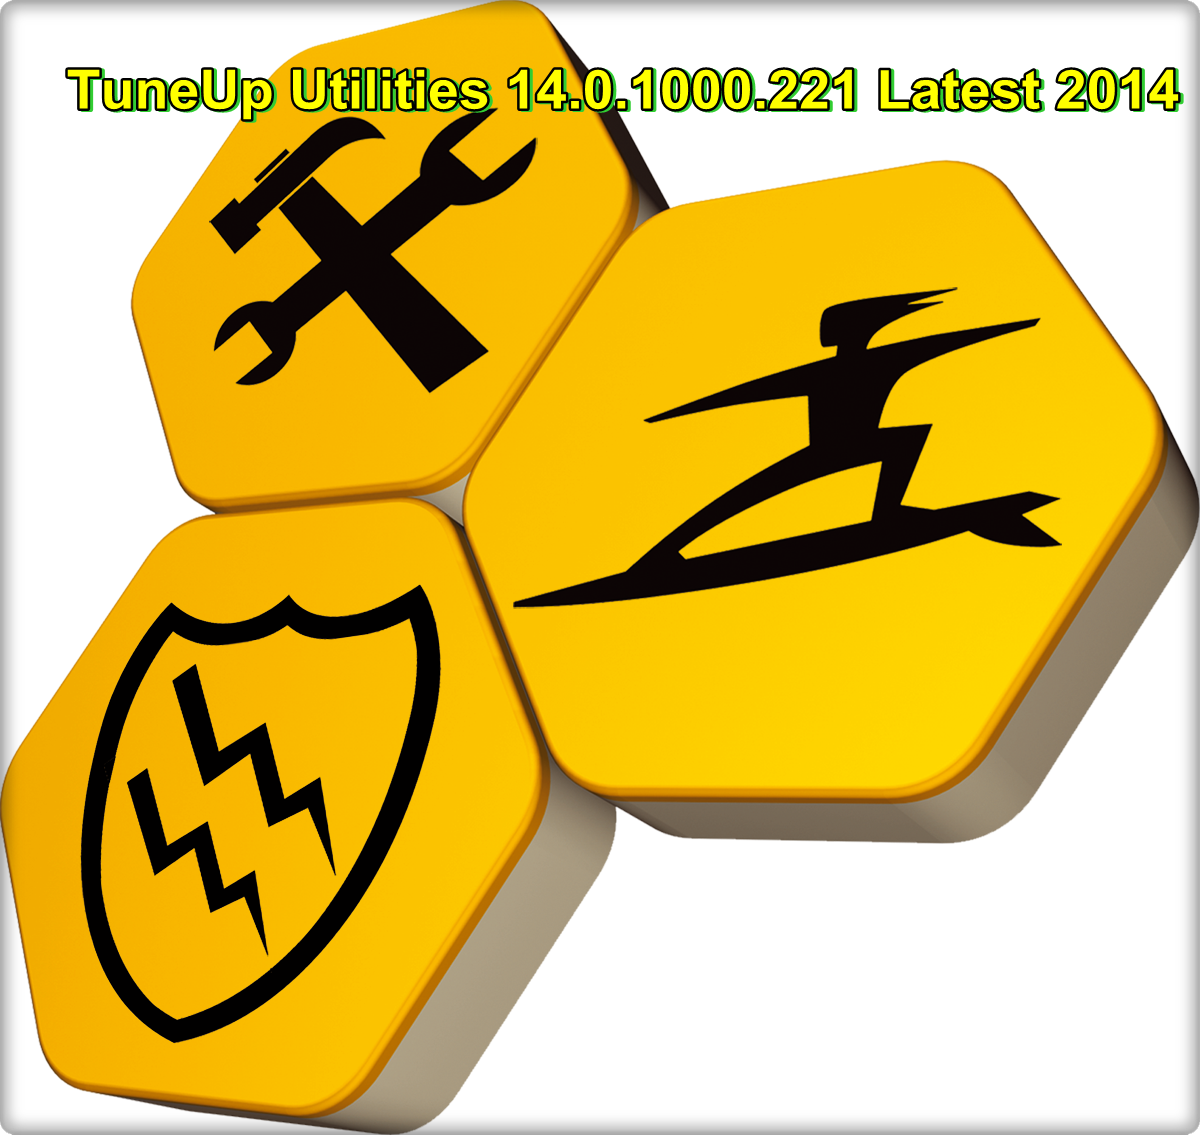 TuneUp Utilities 14.0.1000.221 Latest